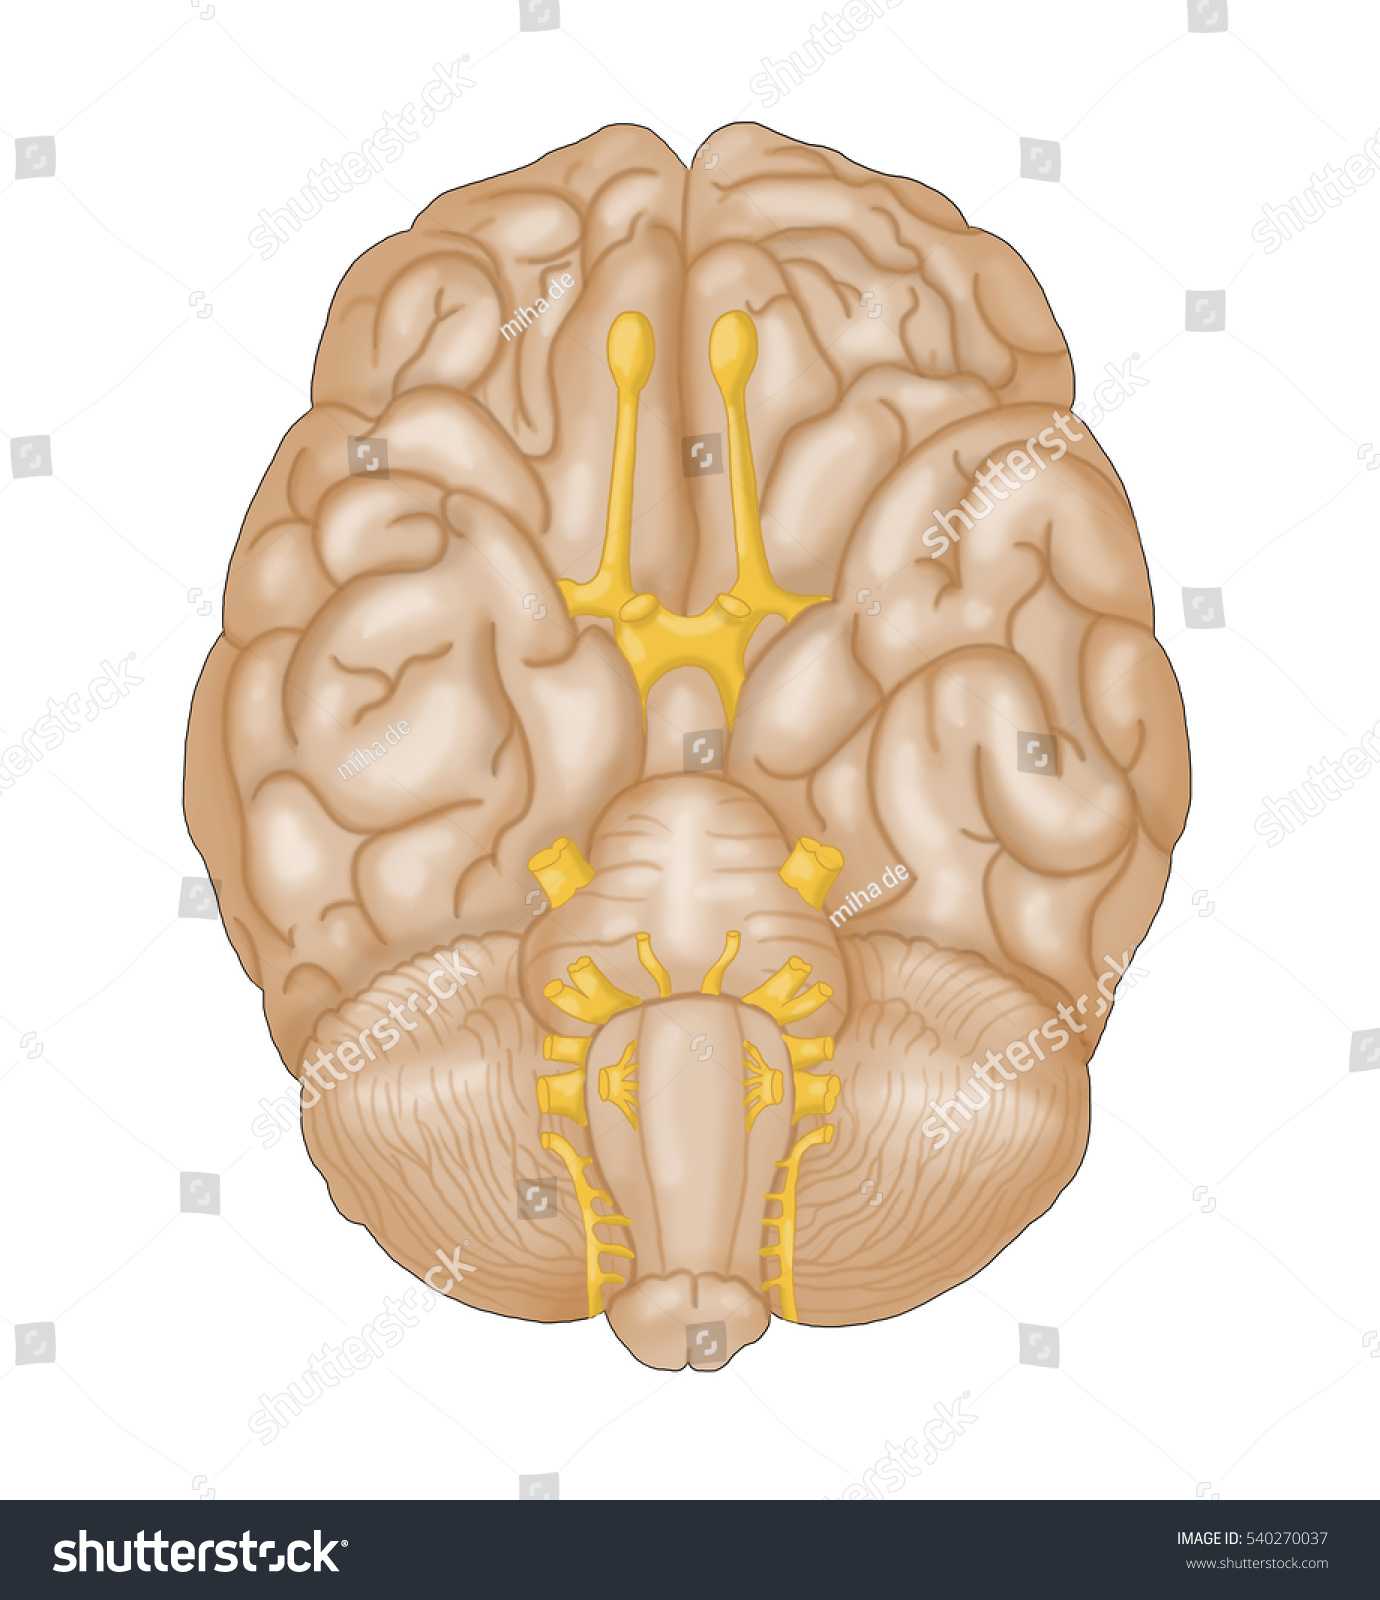 Cranial Nerves Stock Illustration 540270037 1986